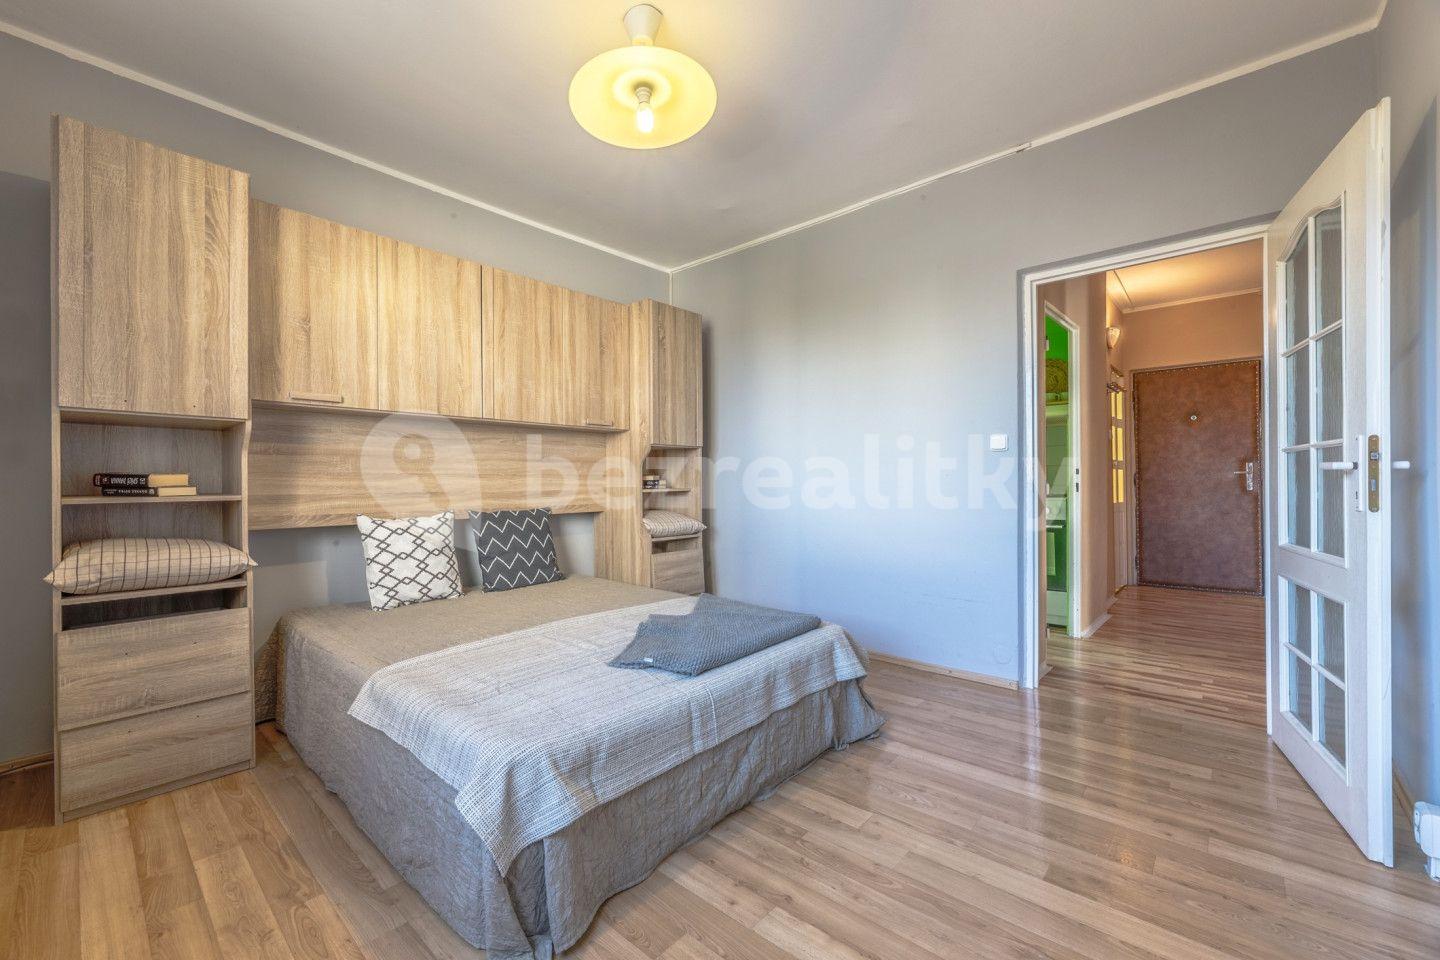 3 bedroom flat for sale, 62 m², Jizerská, Ústí nad Labem, Ústecký Region